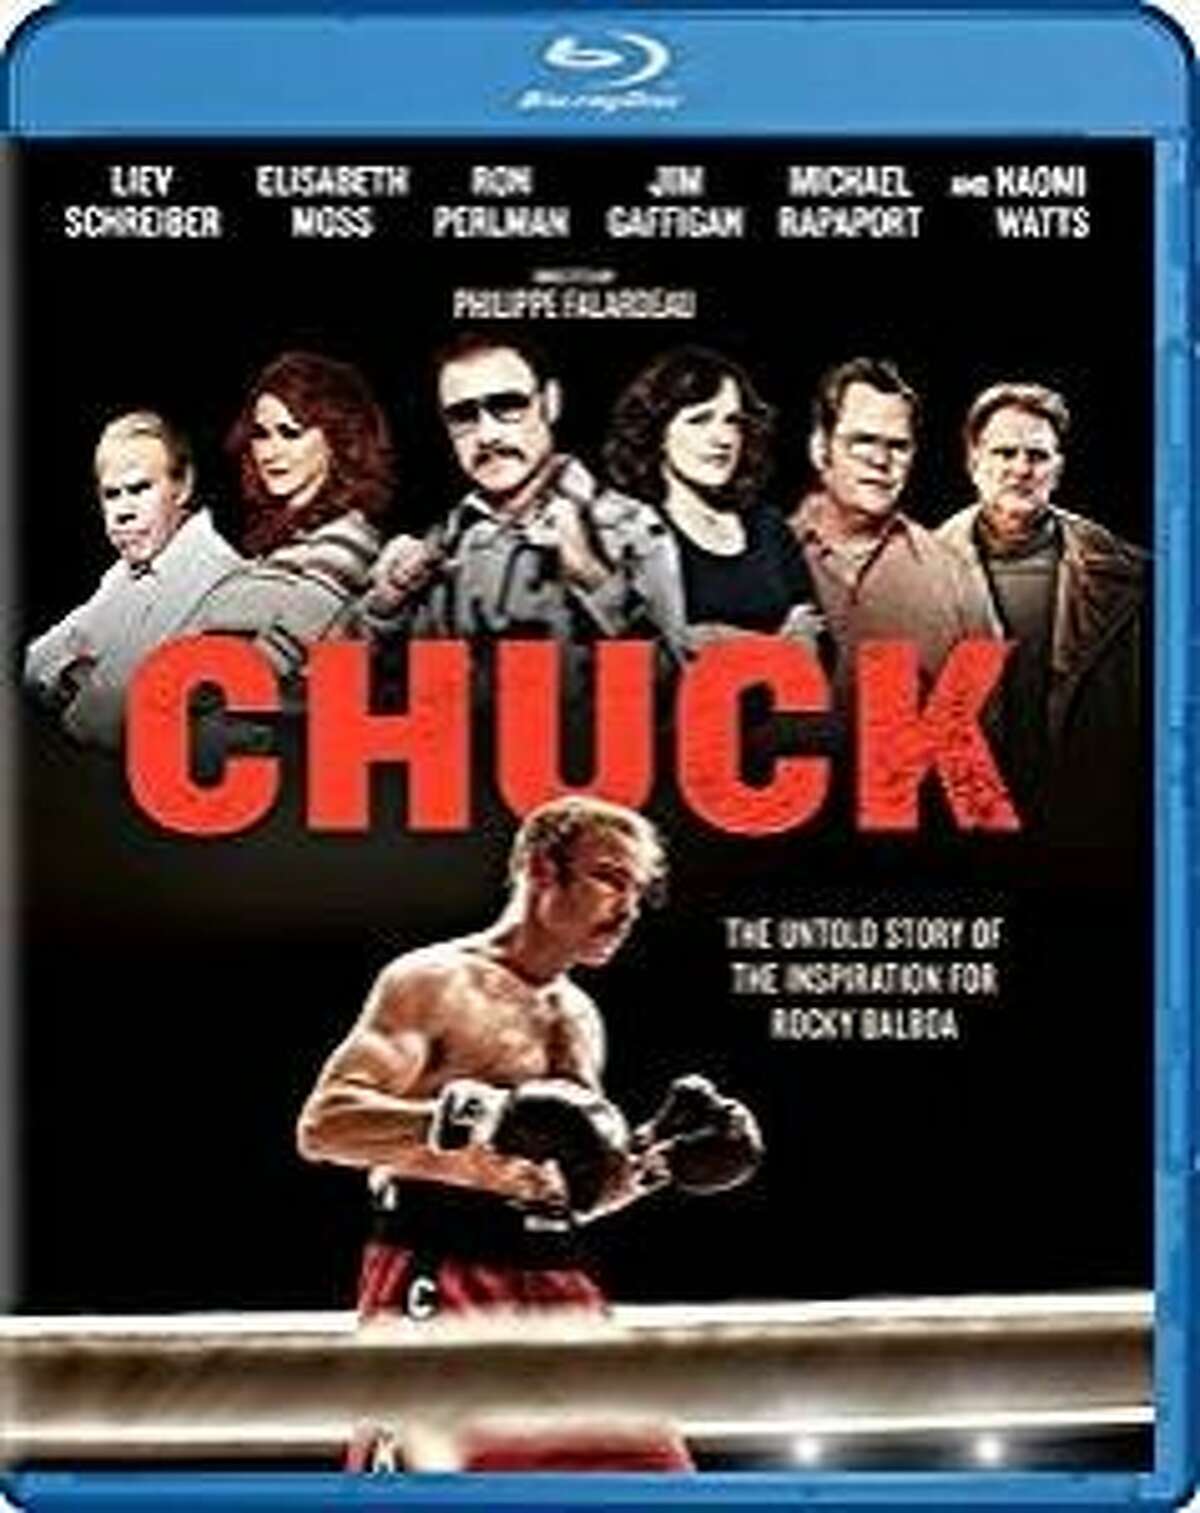 Blu-ray cover: "Chuck"